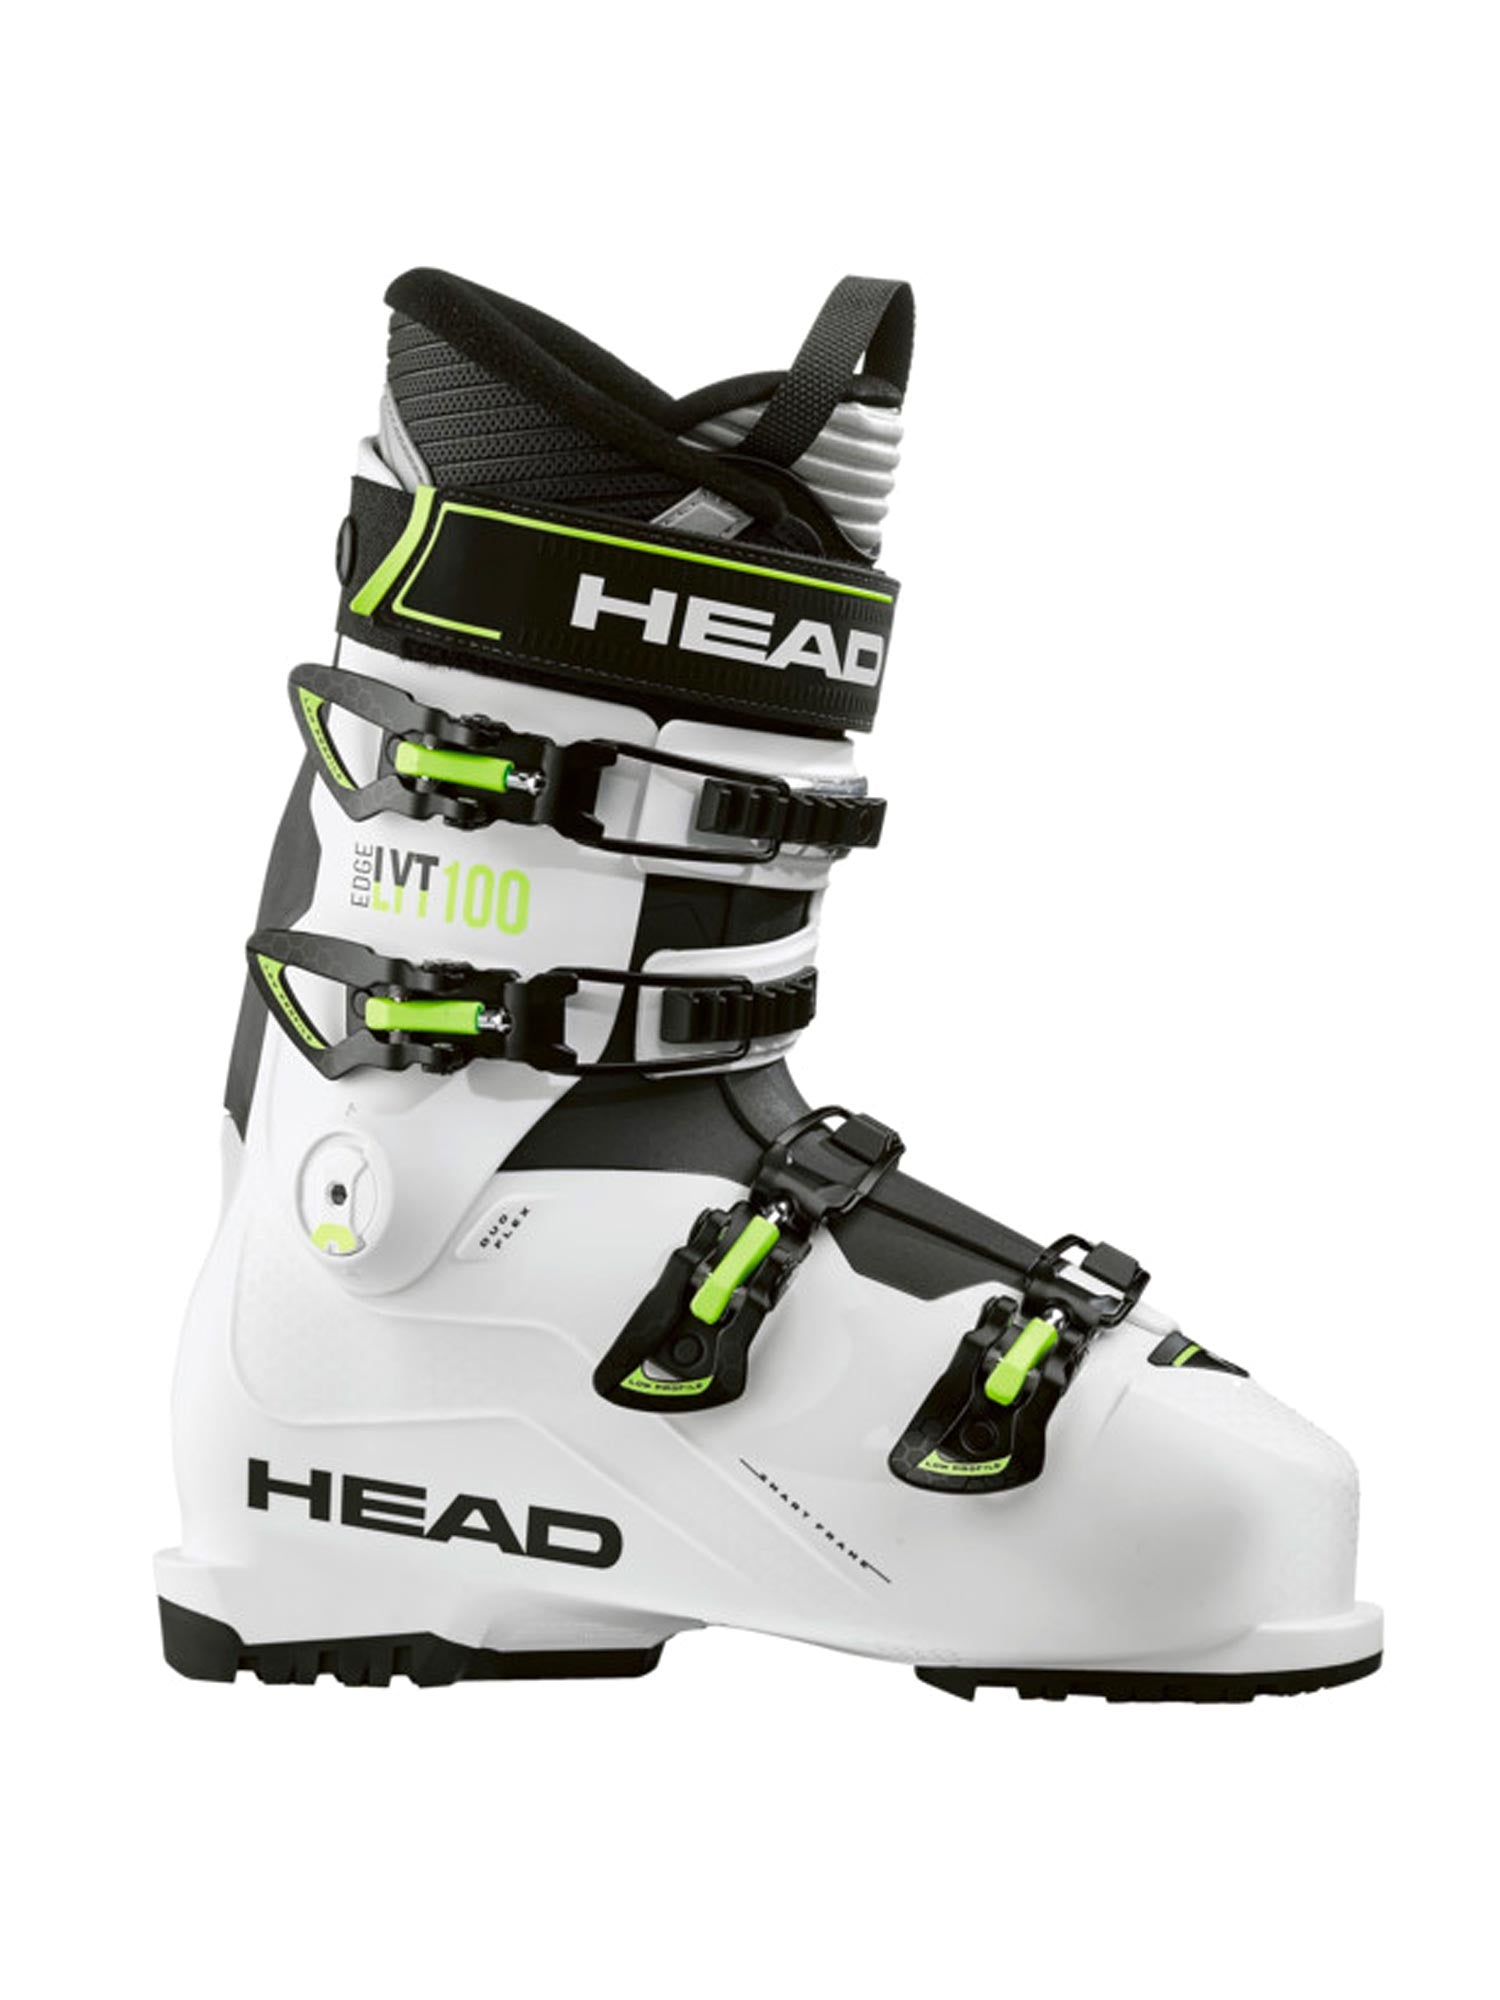 men's Head Edge Lyt ski boots, white with black accents